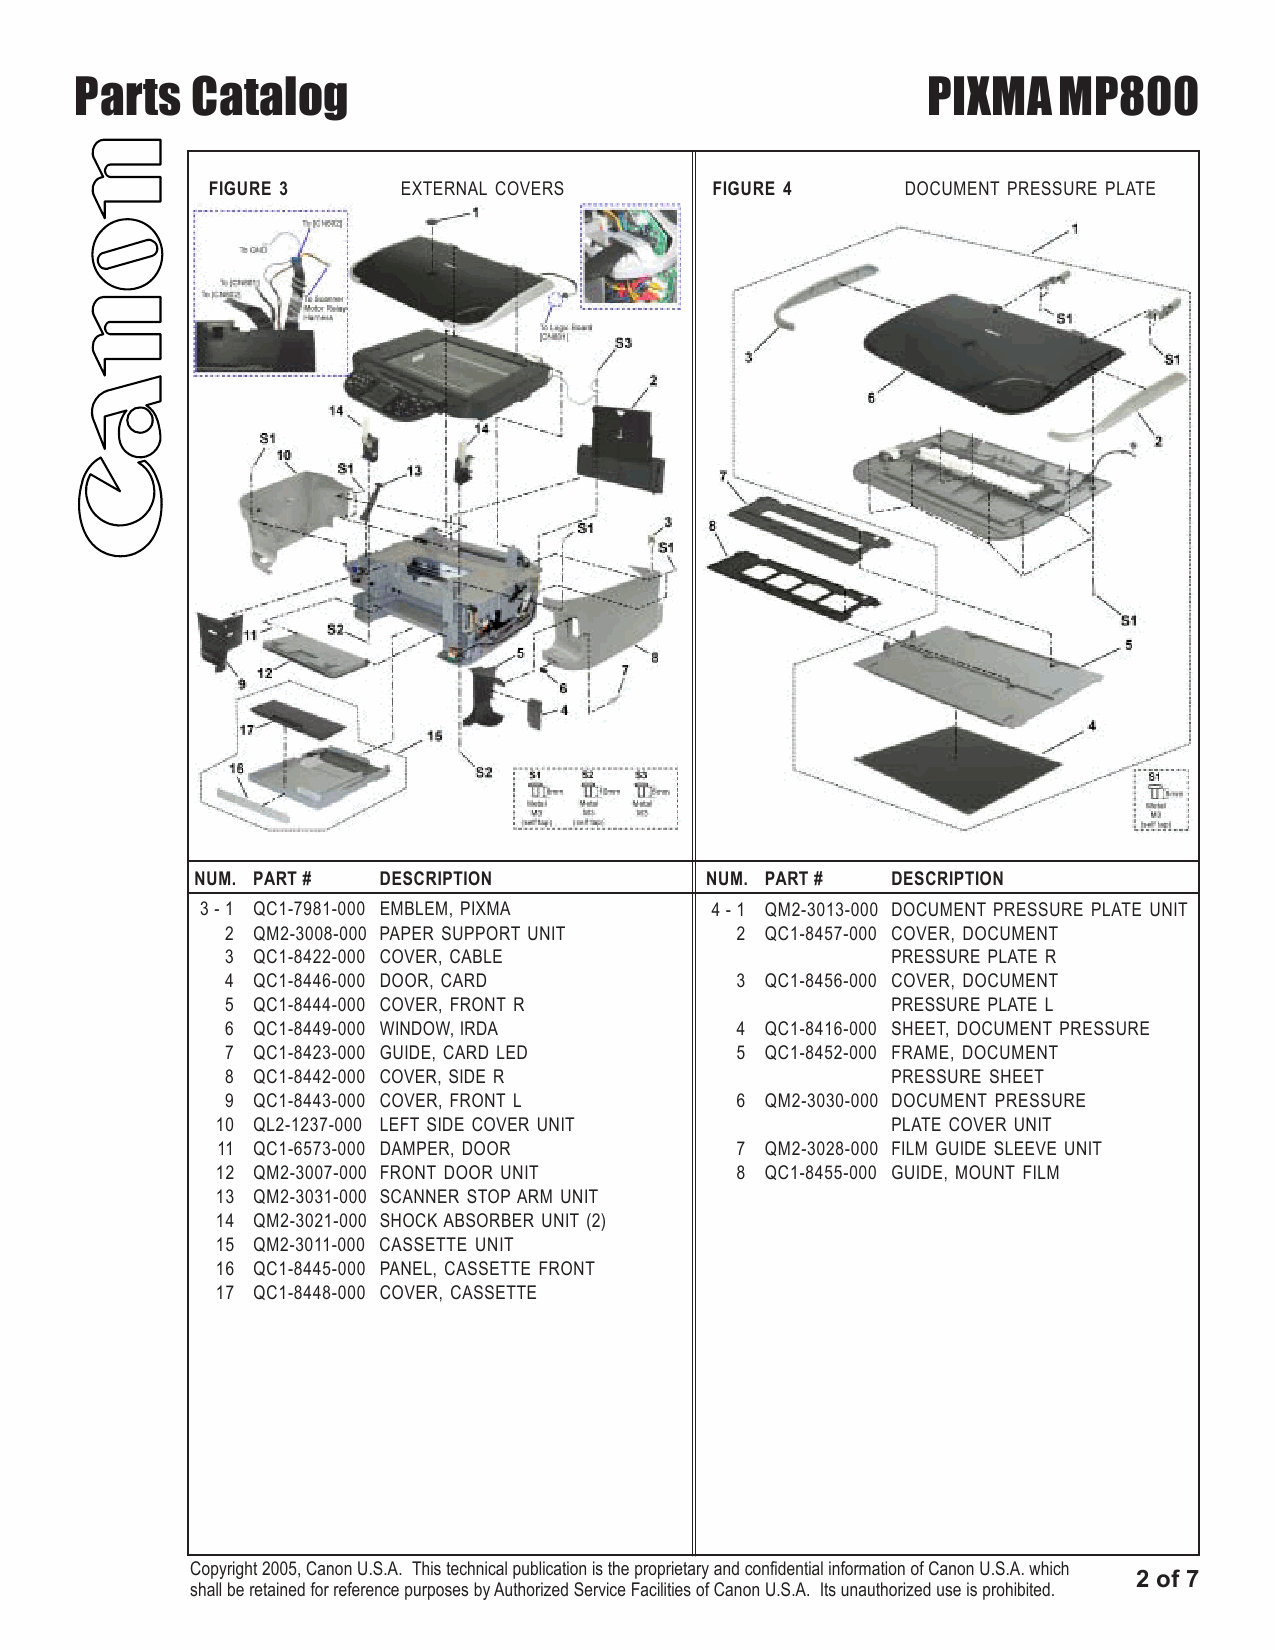 Canon PIXMA MP800 Parts Catalog Manual-3